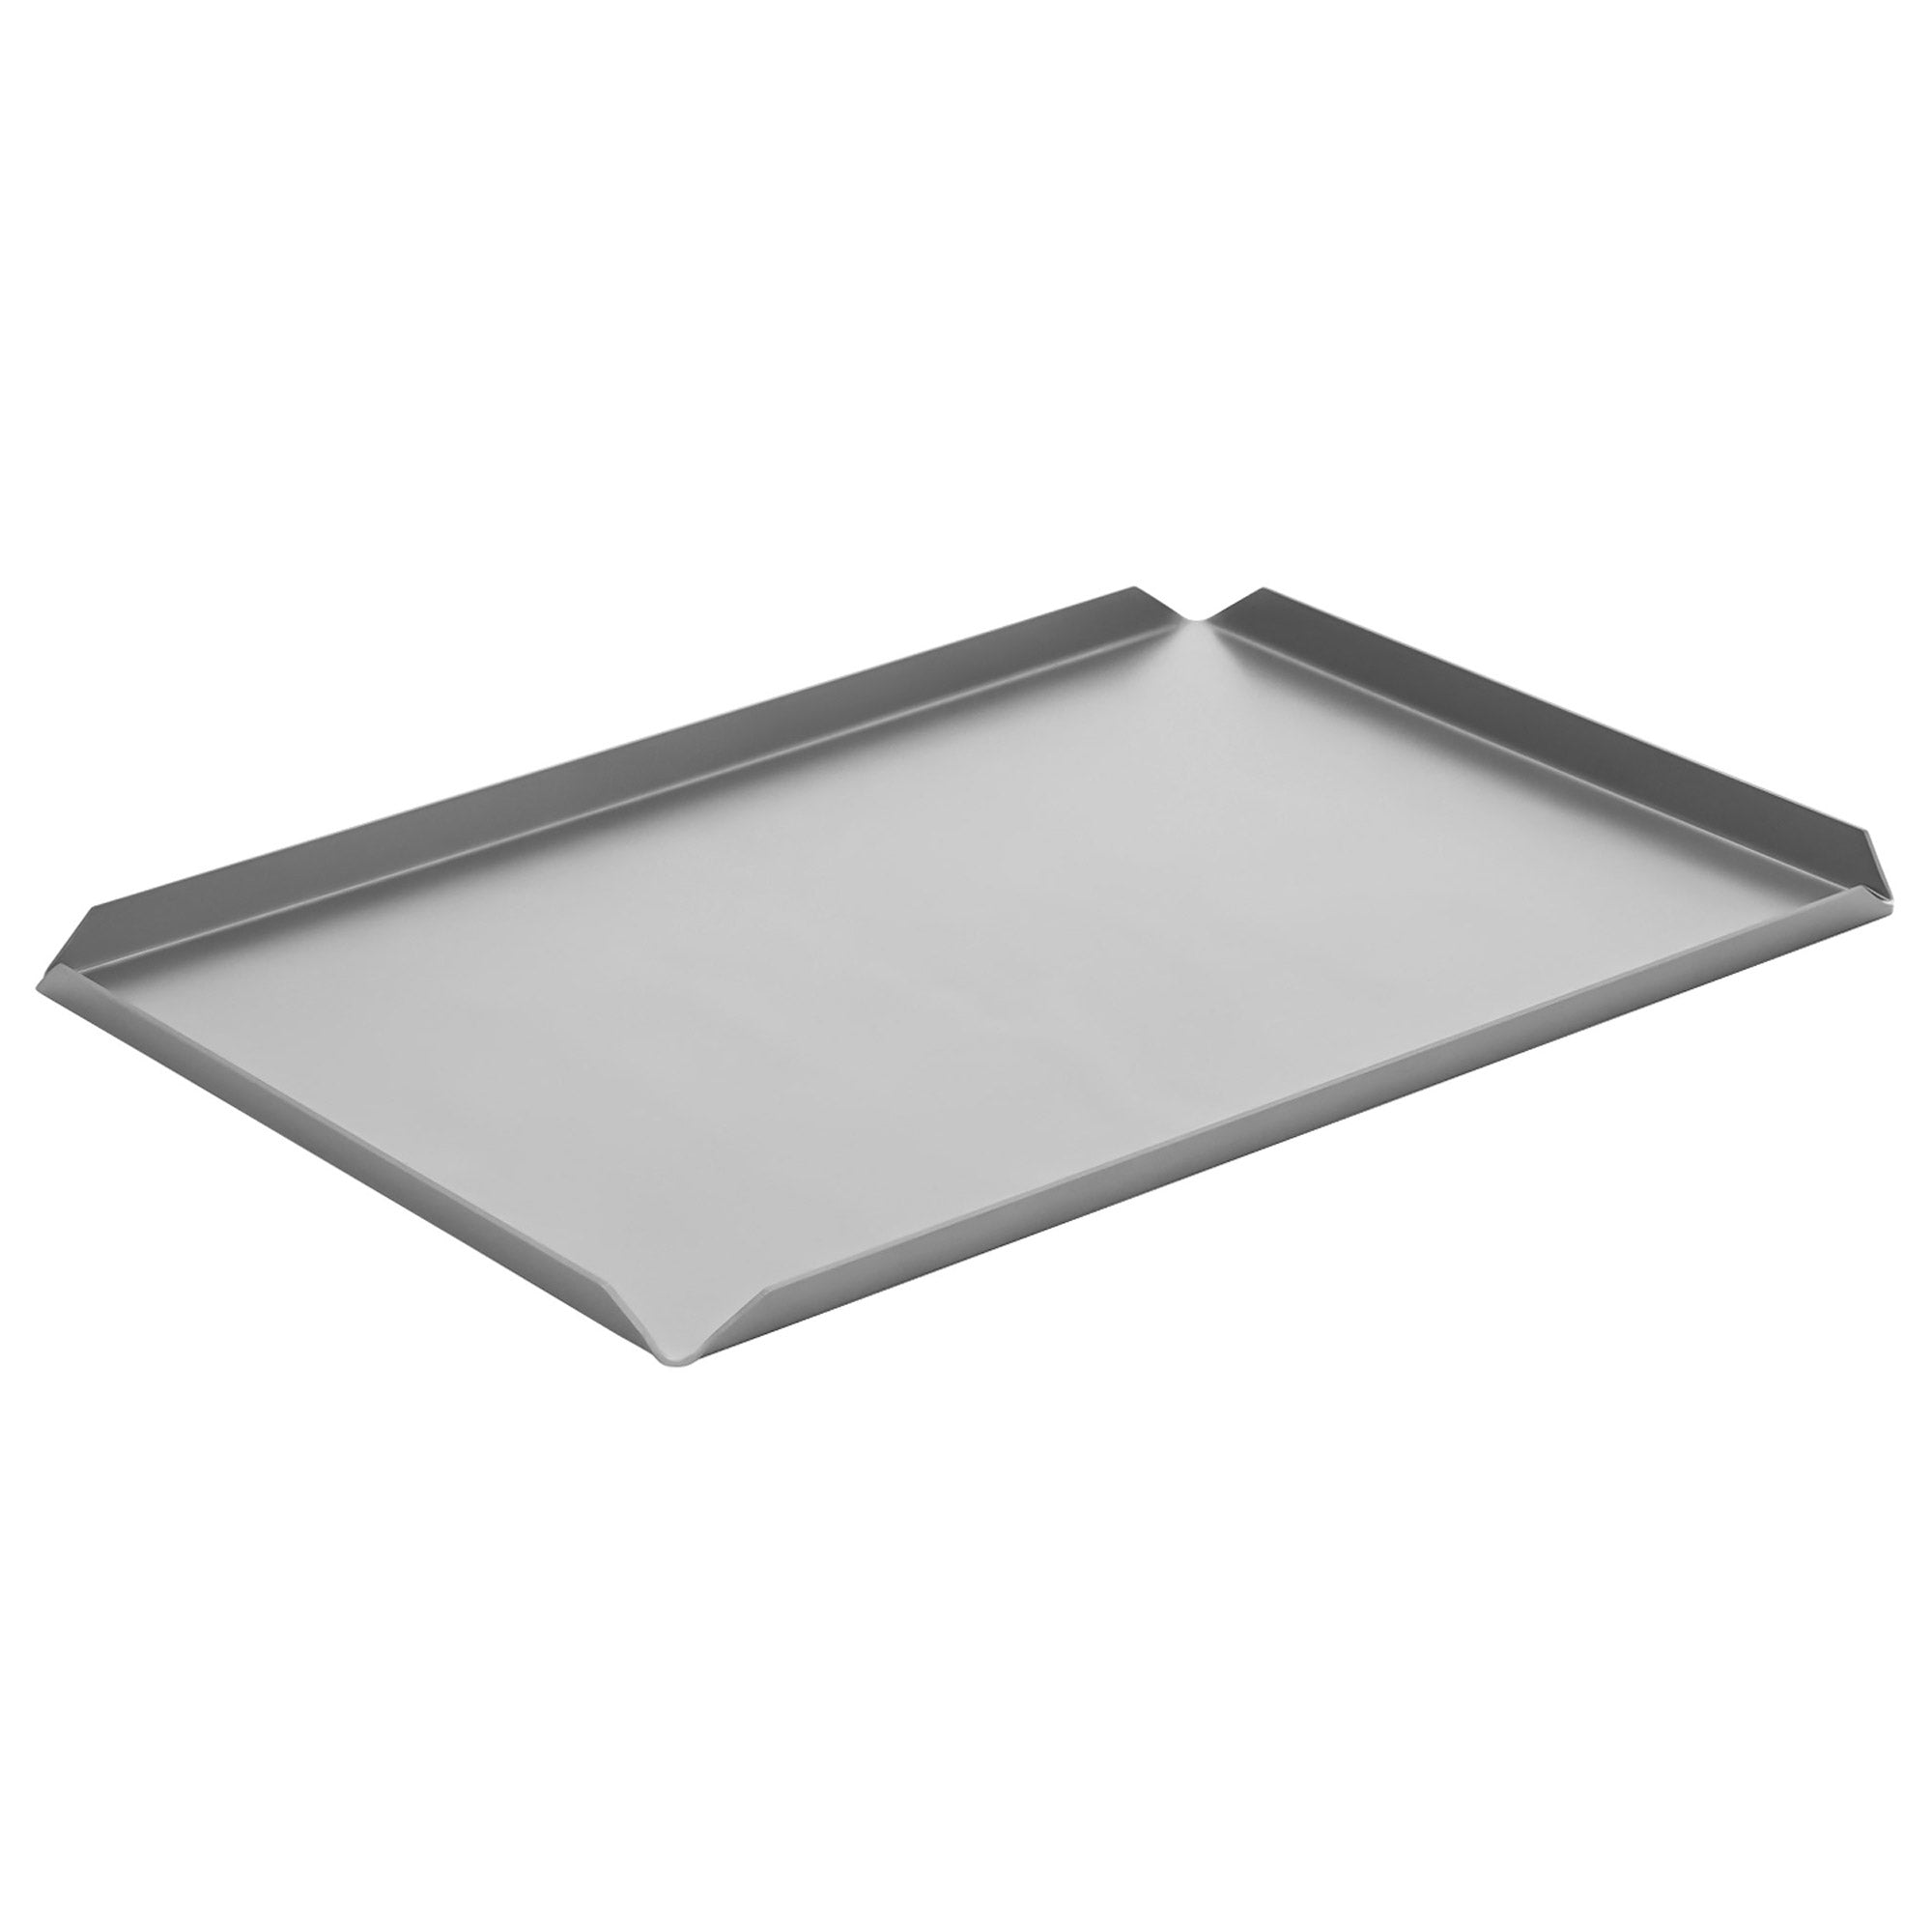 (5 stk.) Konfekt og presentasjonsplate i aluminium - 400 x 100 x 10 mm - aluminium